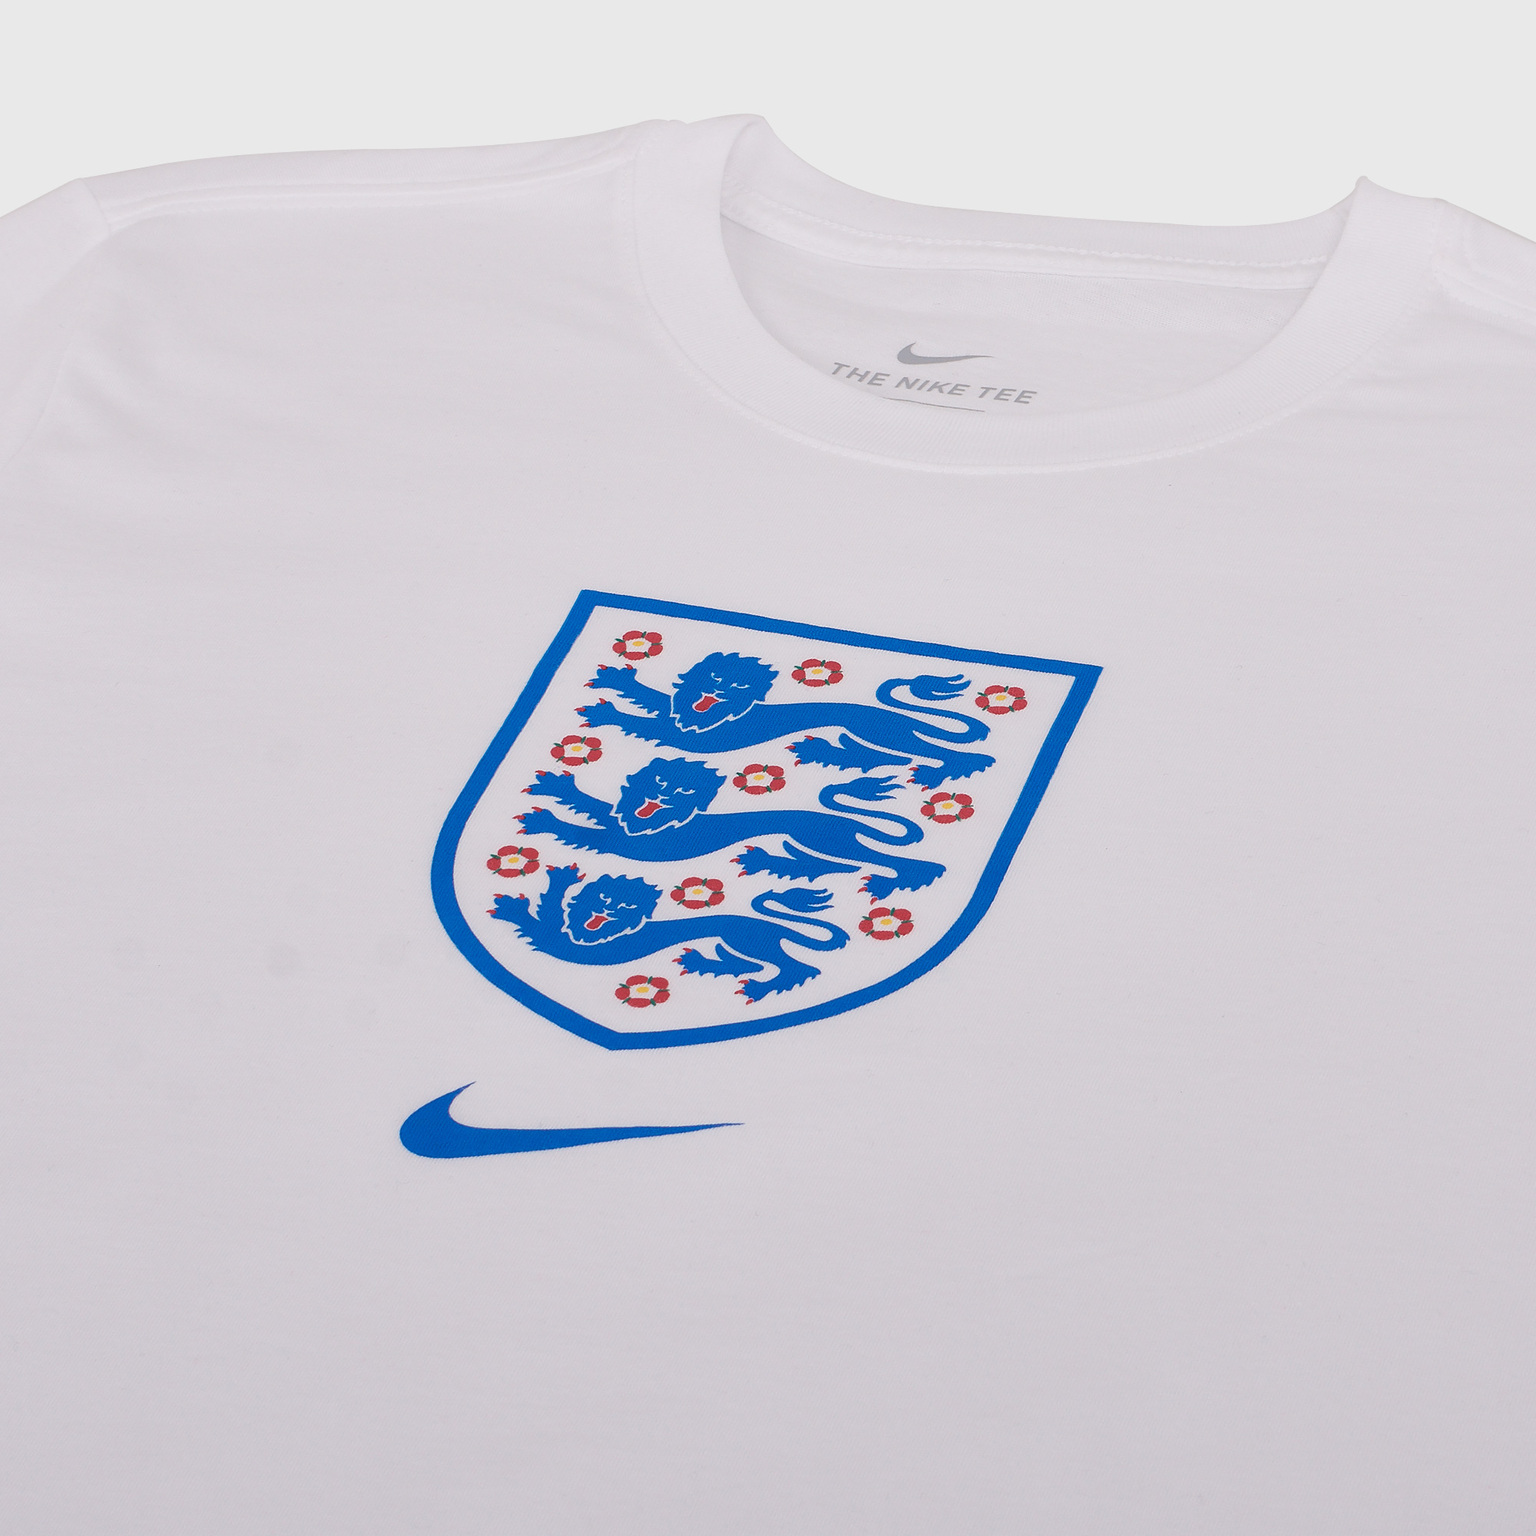 Футболка хлопковая Nike сборной Англии сезон 2020/21